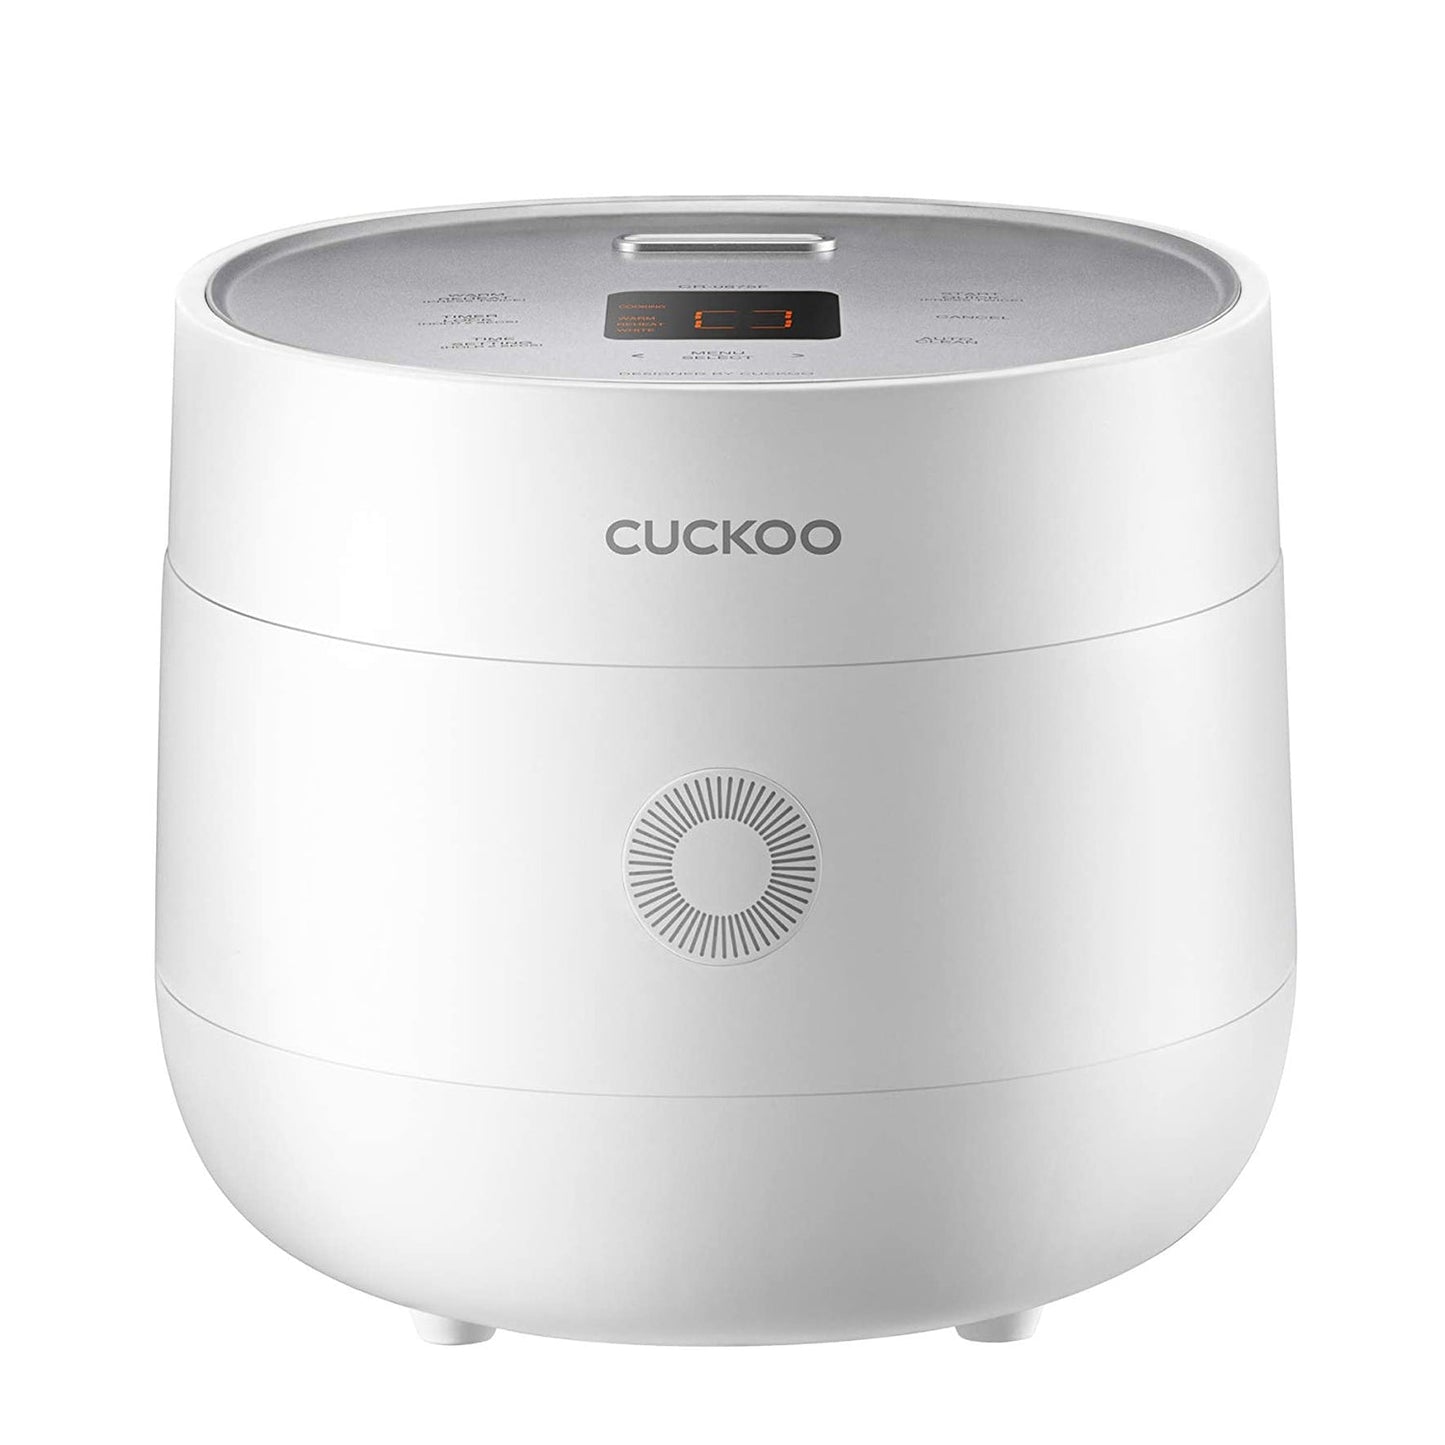 Cuckoo Micom Electric Warmer (CR-0375F)